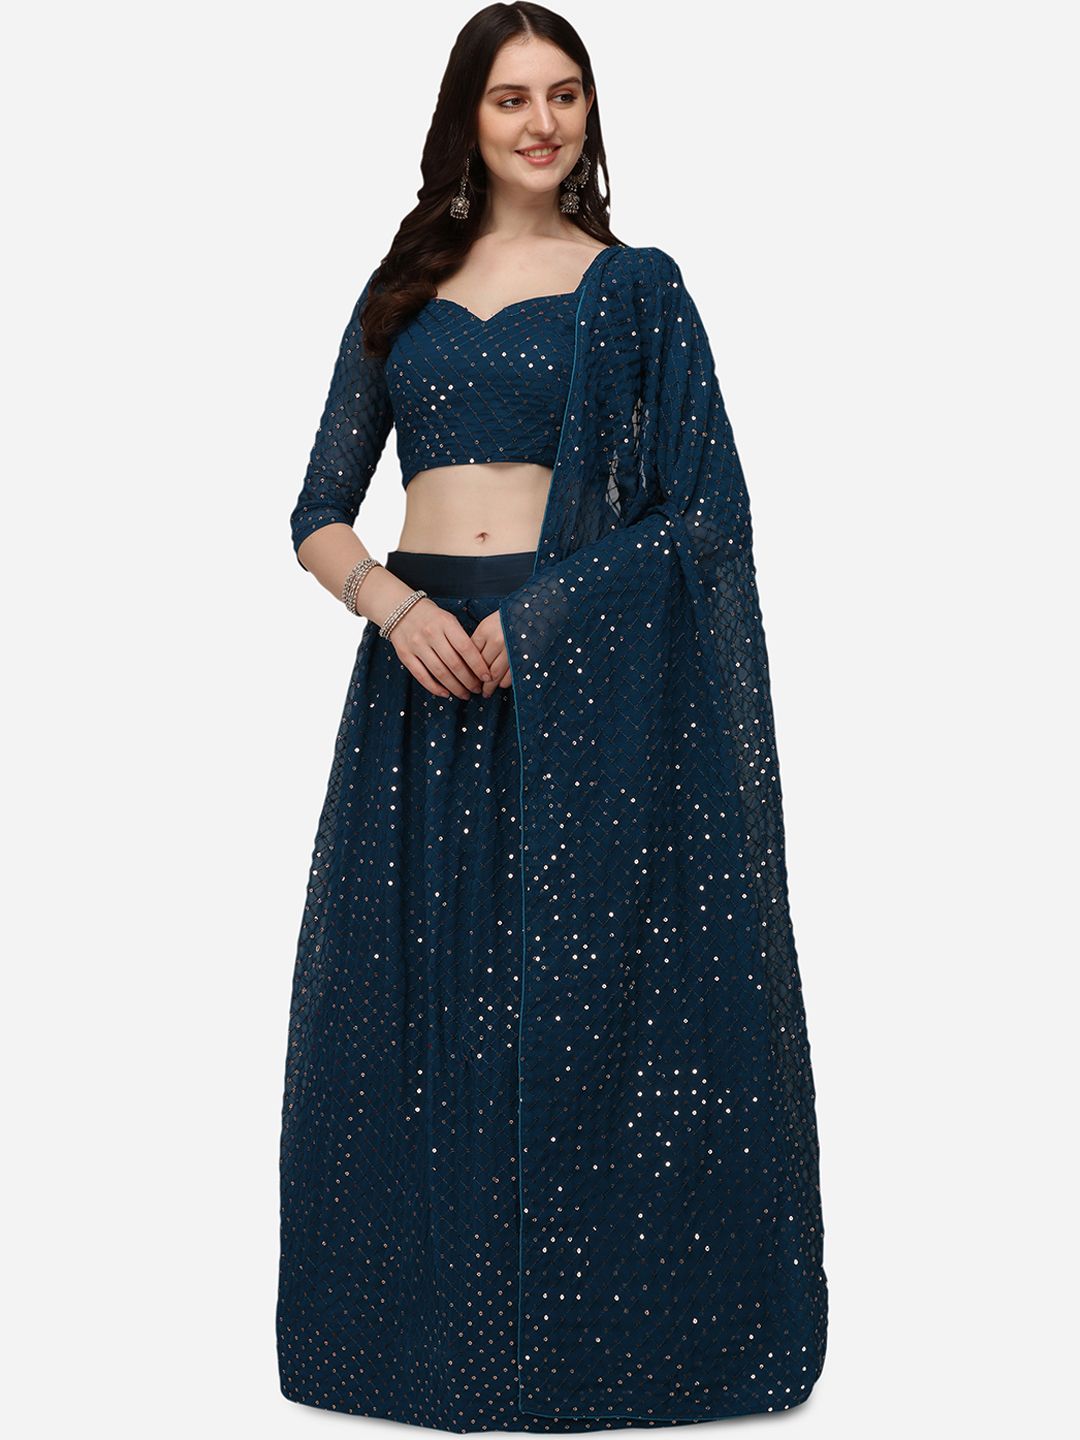 Pratham Blue Teal Blue Embroidered Sequinned Semi-Stitched Lehenga Choli Set Price in India